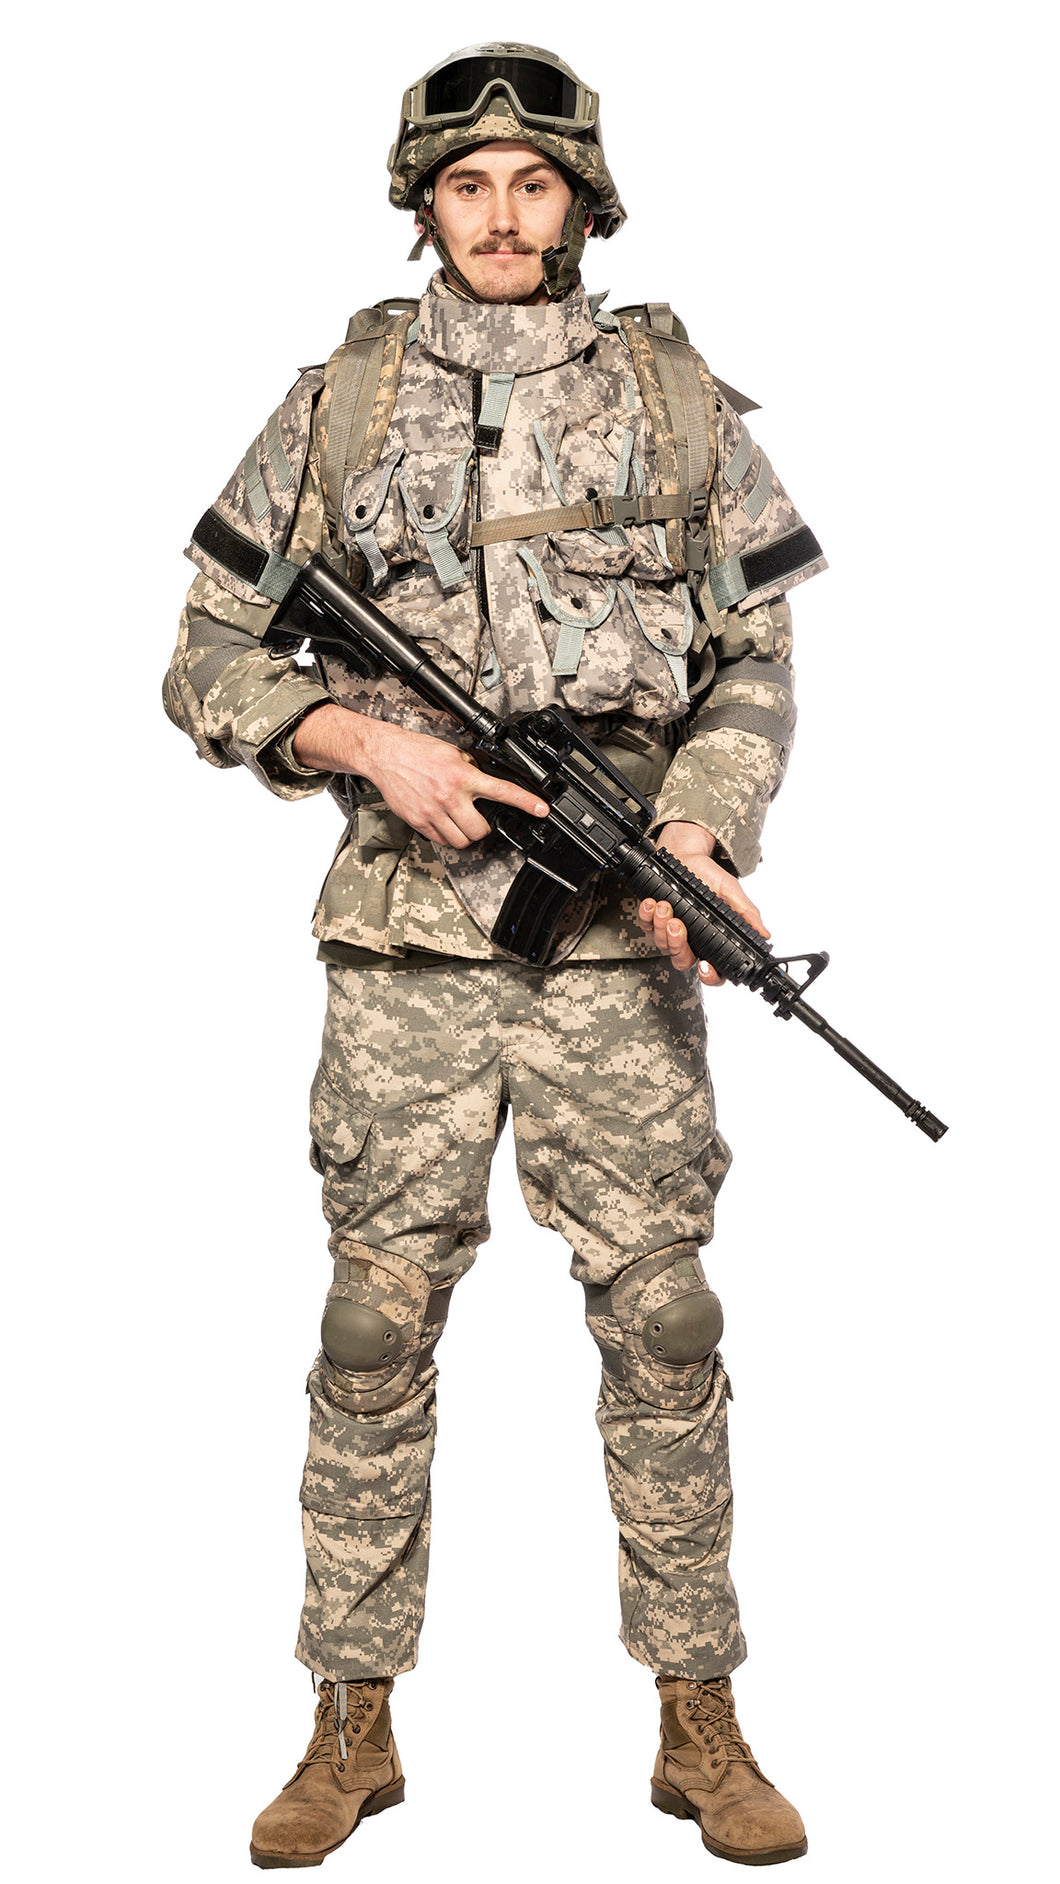 US Army UCP Digital Camouflage Battle dress uniform